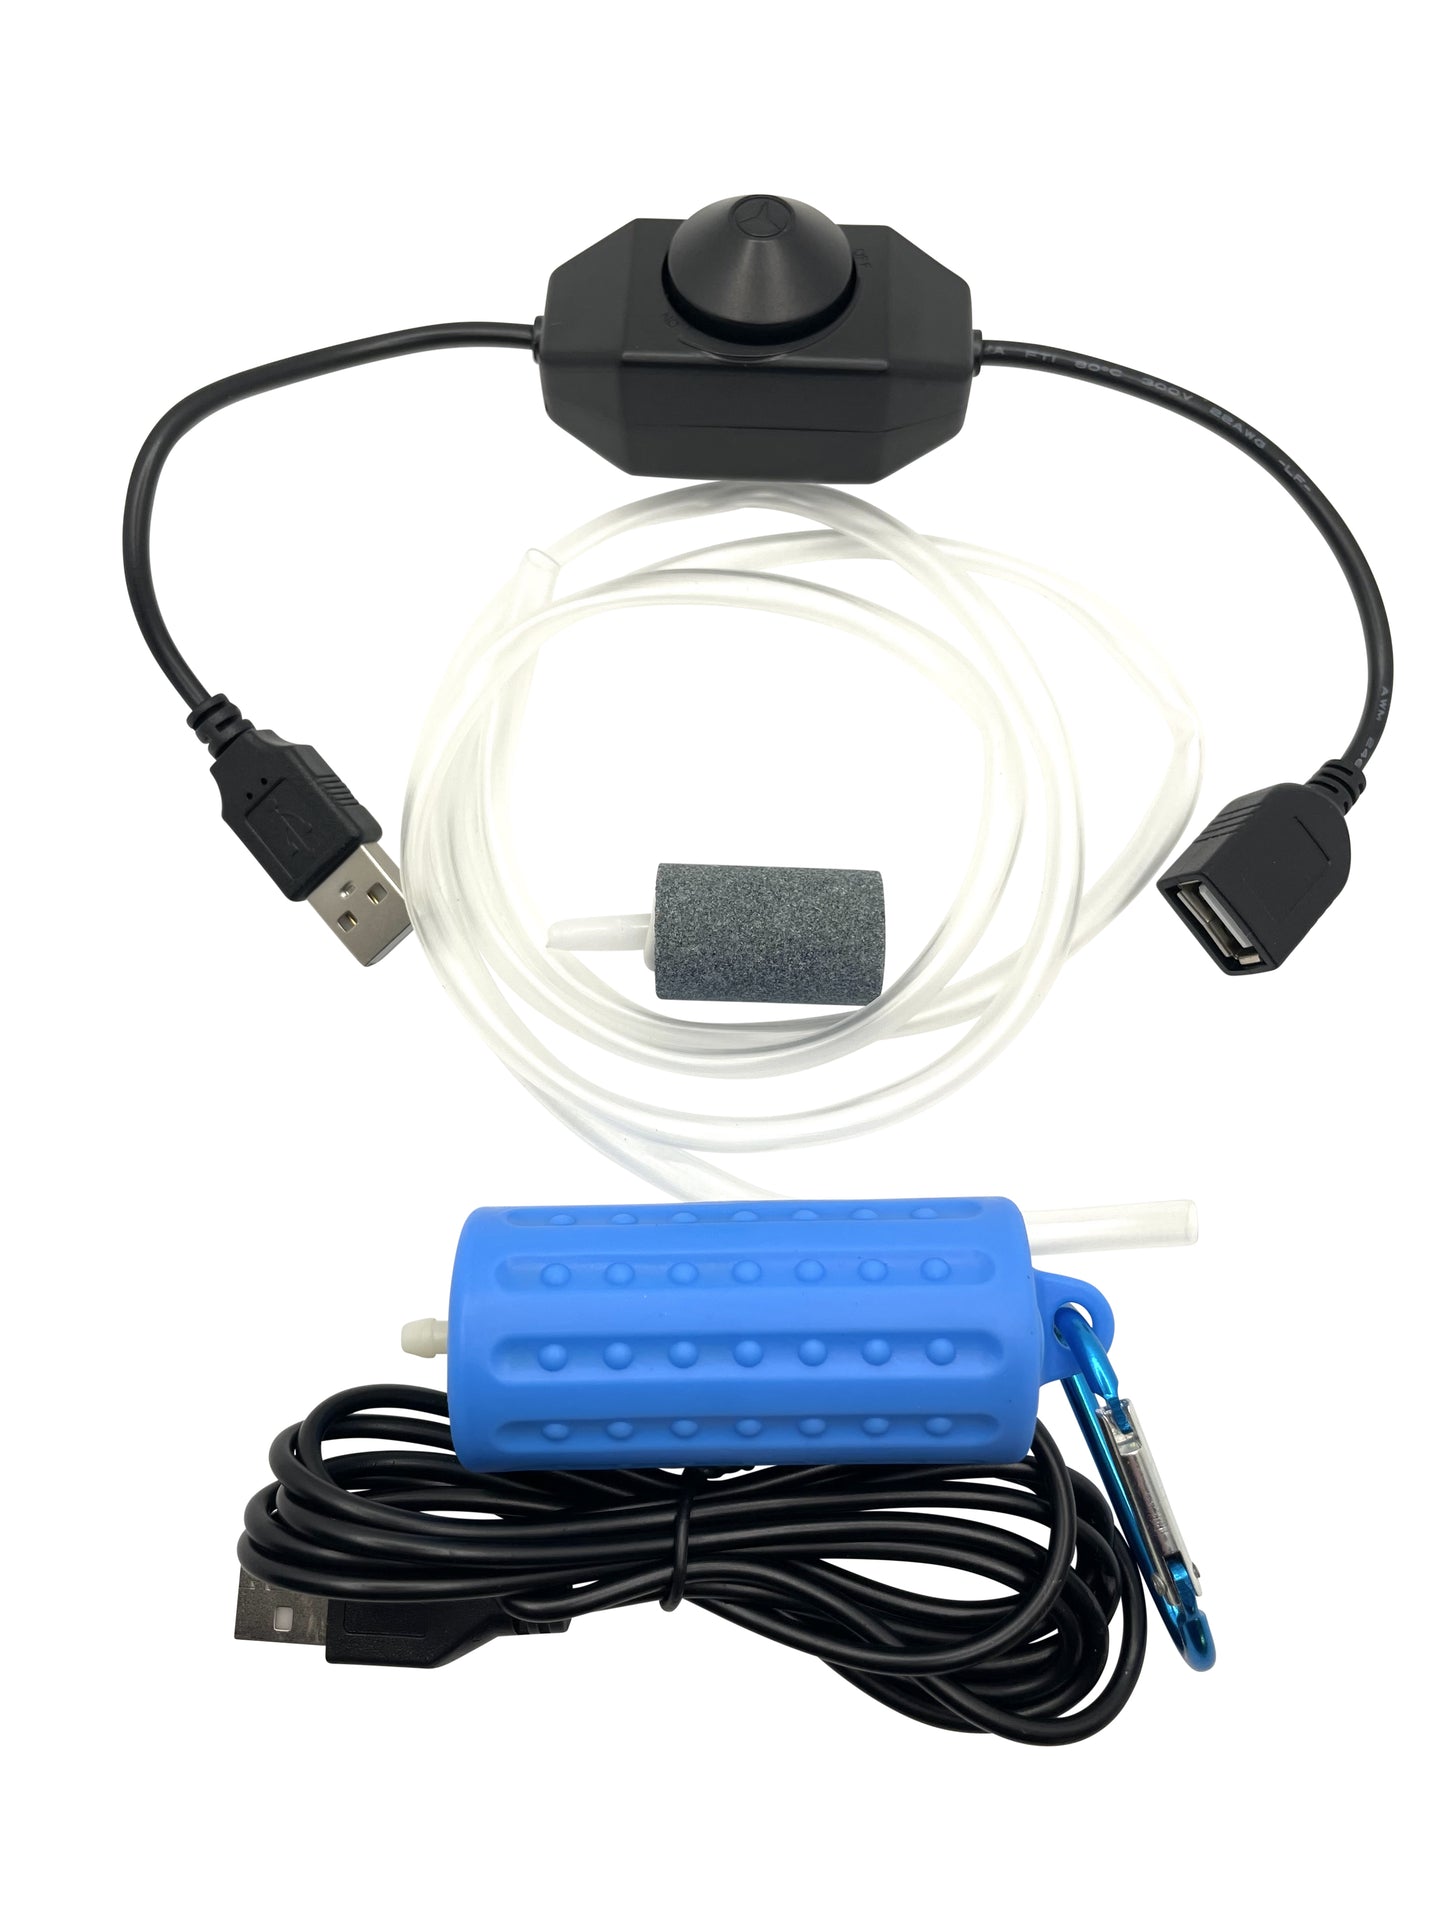 Silent USB Aeration Pump Kit | Bio-Film / Aquatic Protein INHIBITOR!